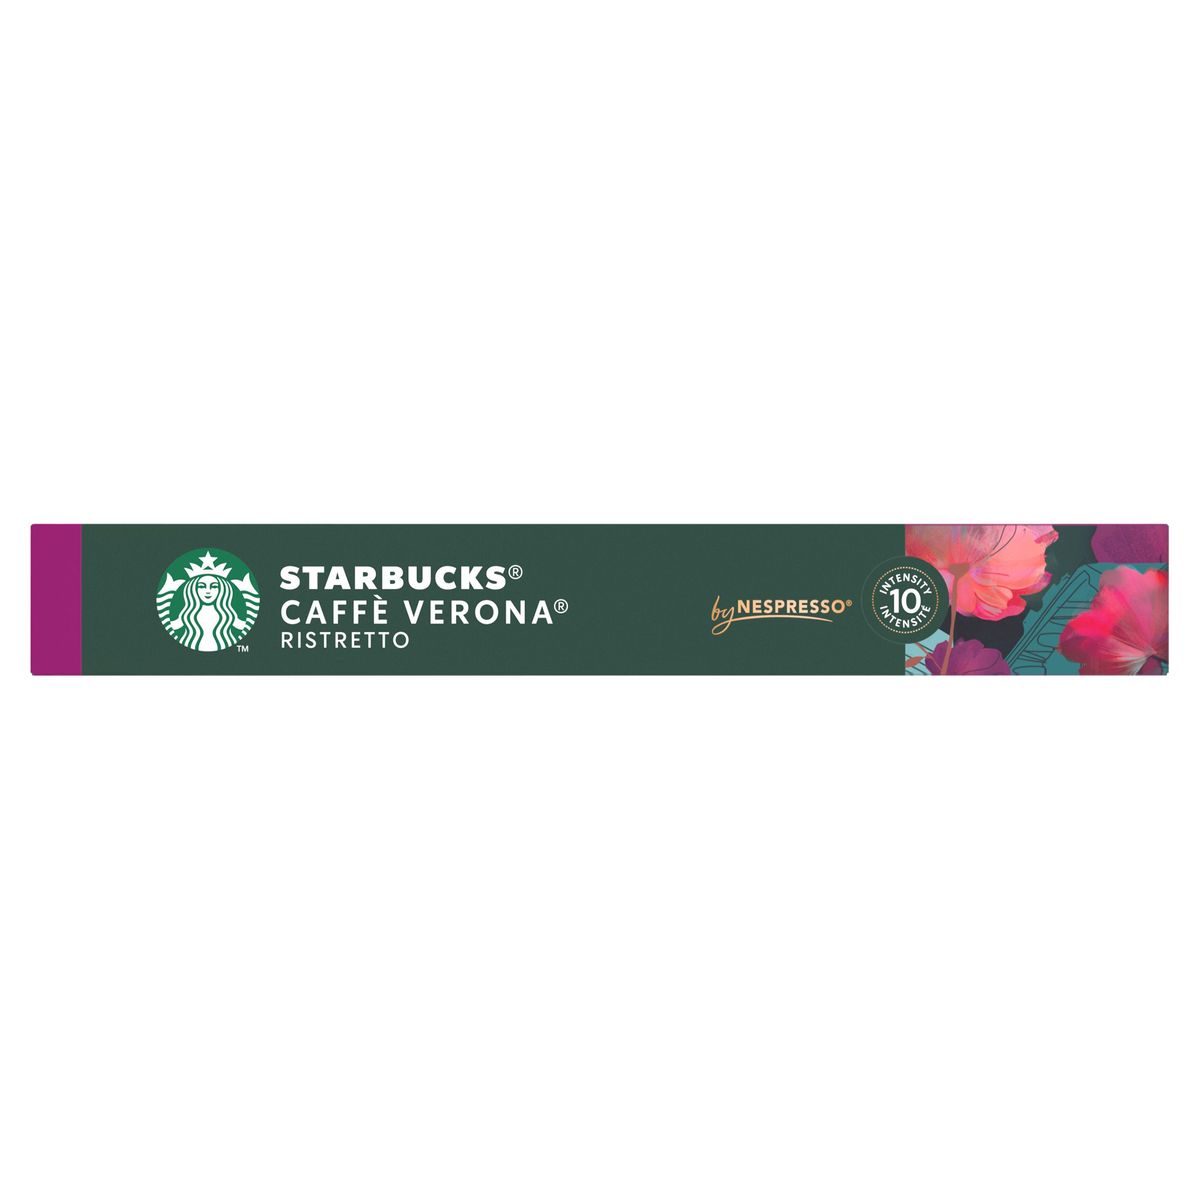 Starbucks by Nespresso Café Verona 10 Capsules12x55g